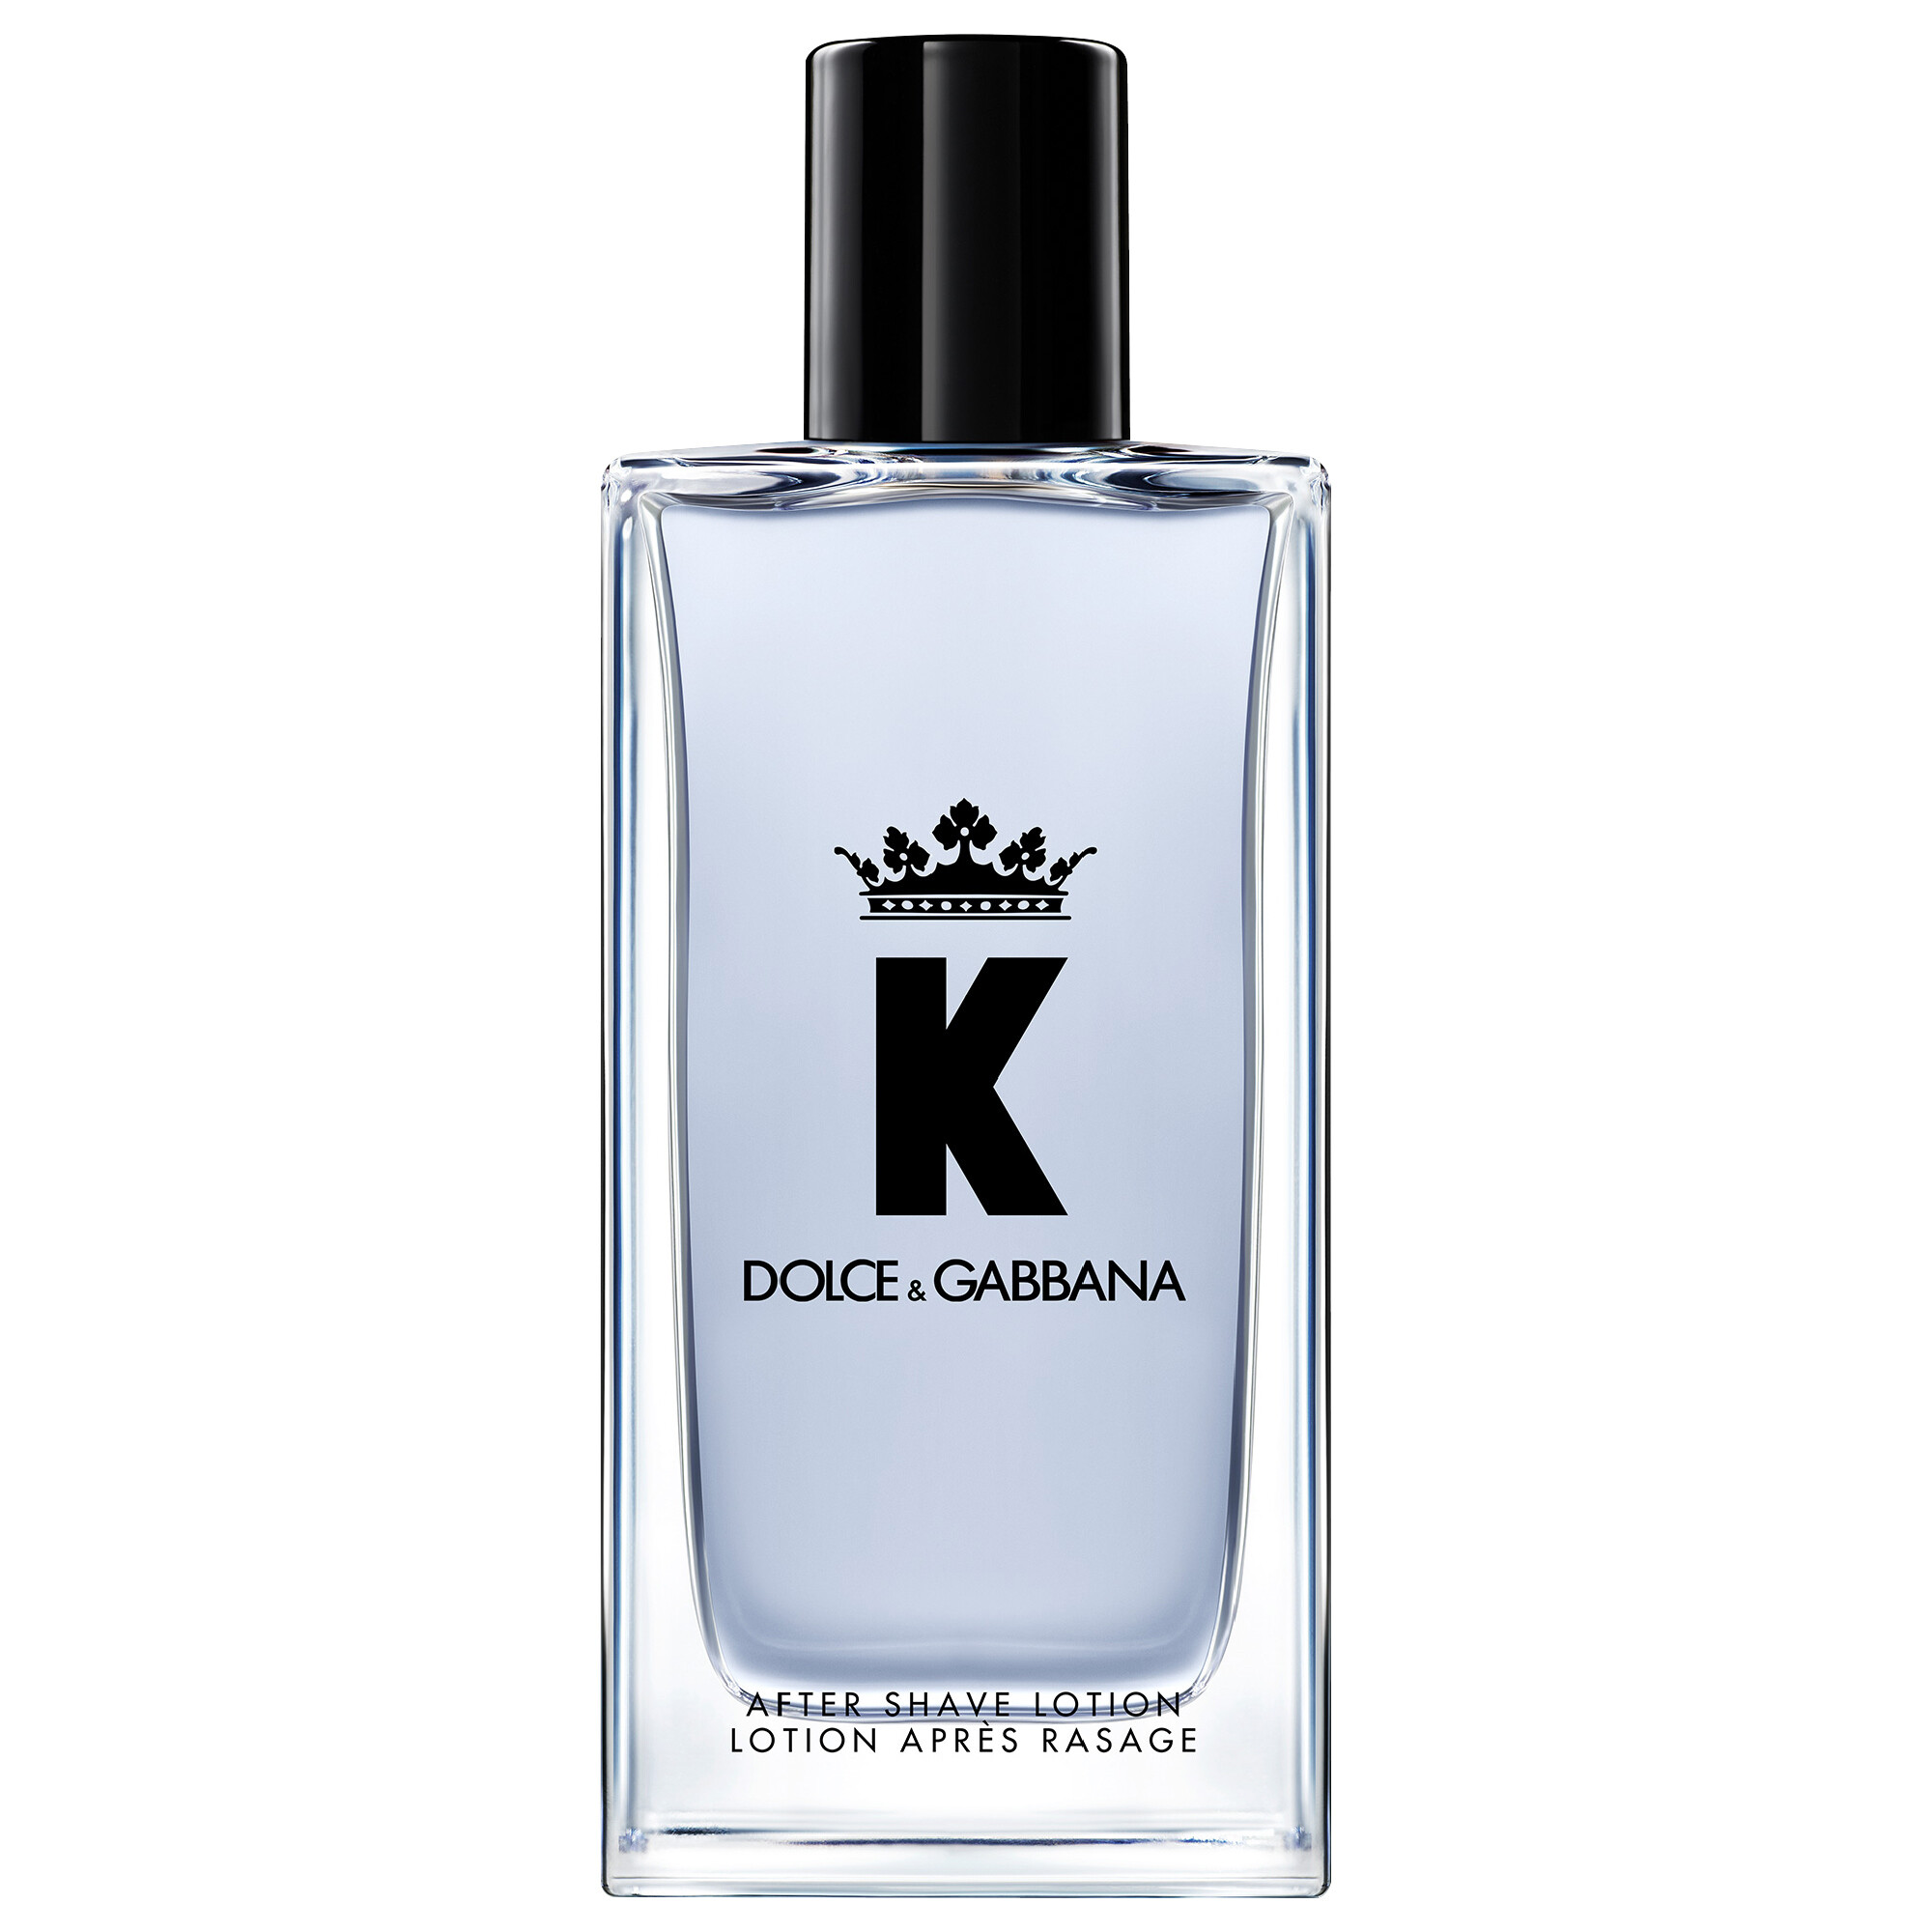 Dolce & Gabbana K After Shave Lotion